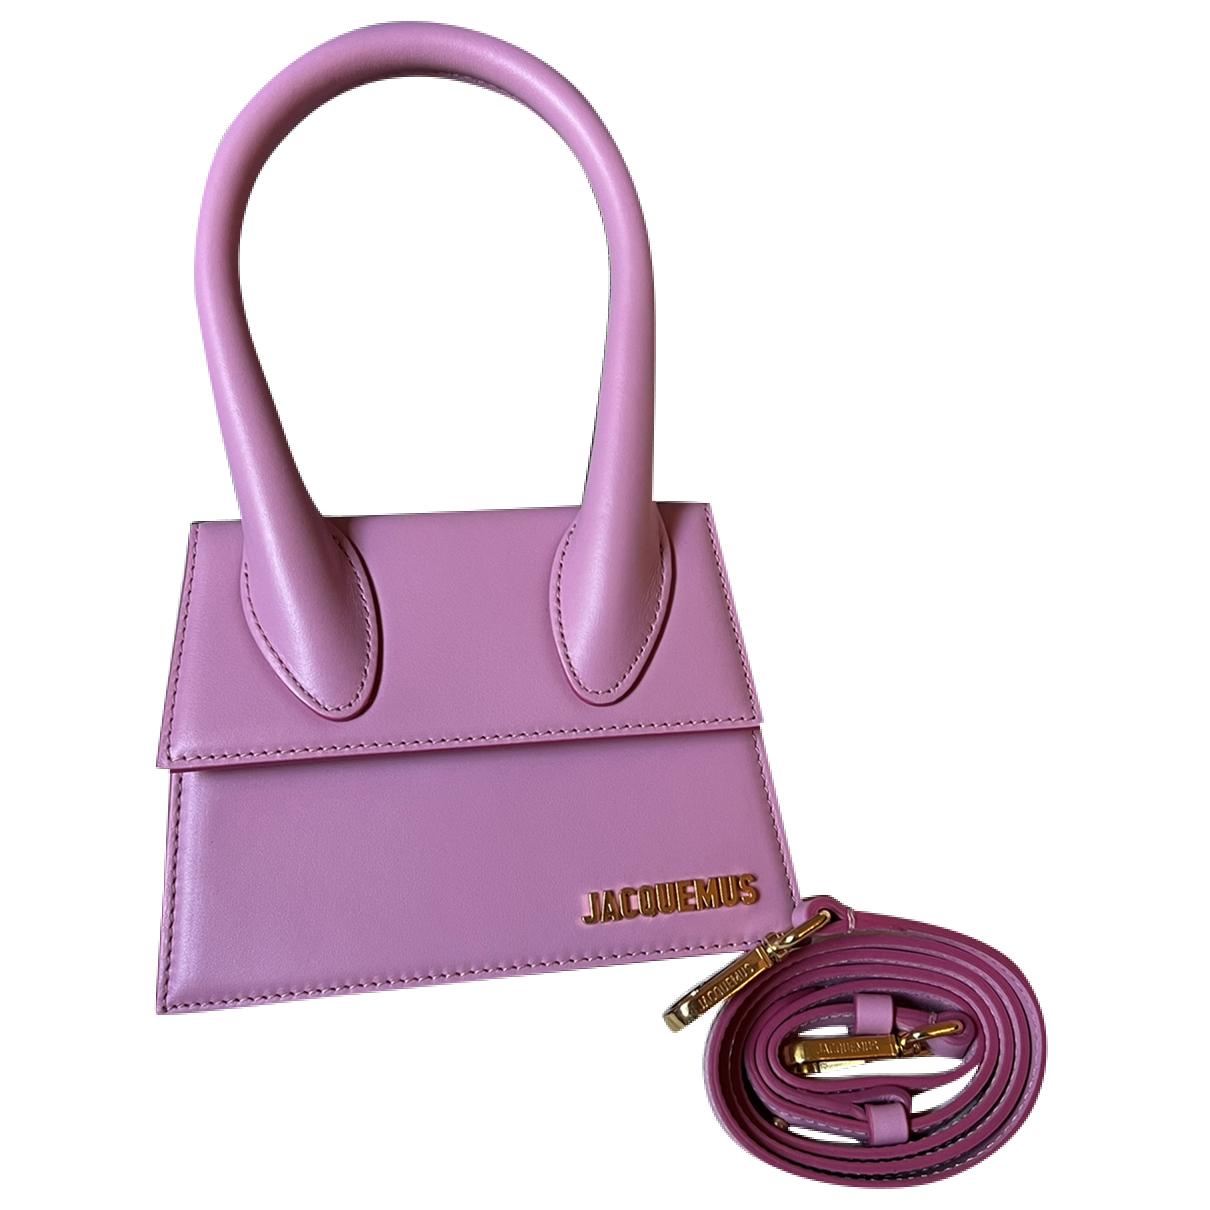 Chiquito leather handbag - 1